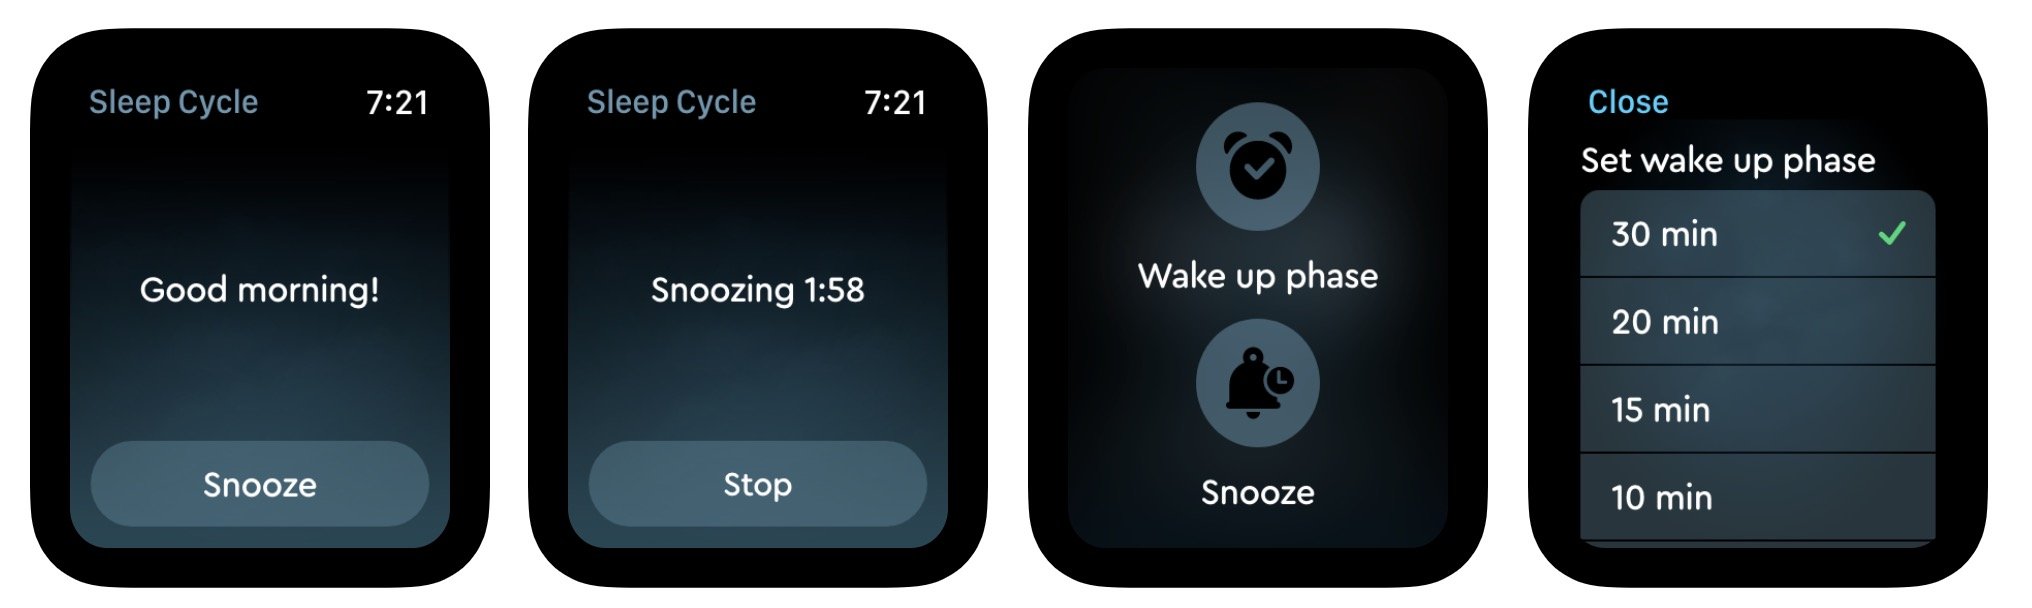 alarm clock app for mac that works in sleep mode